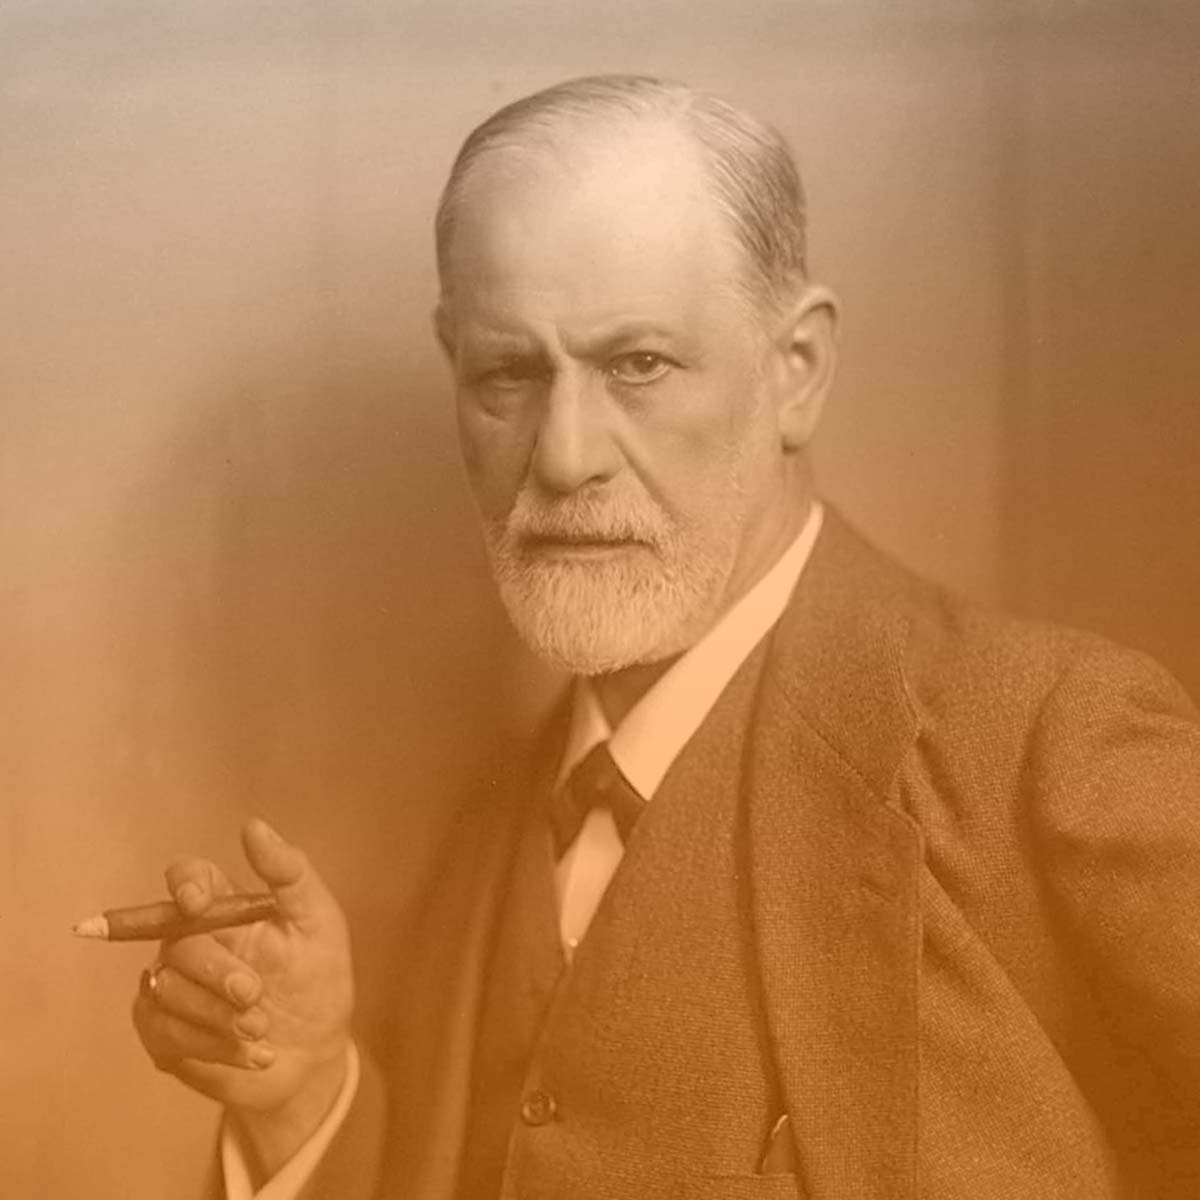 Sigmund Freud smoking cigar in portrait with orange hue